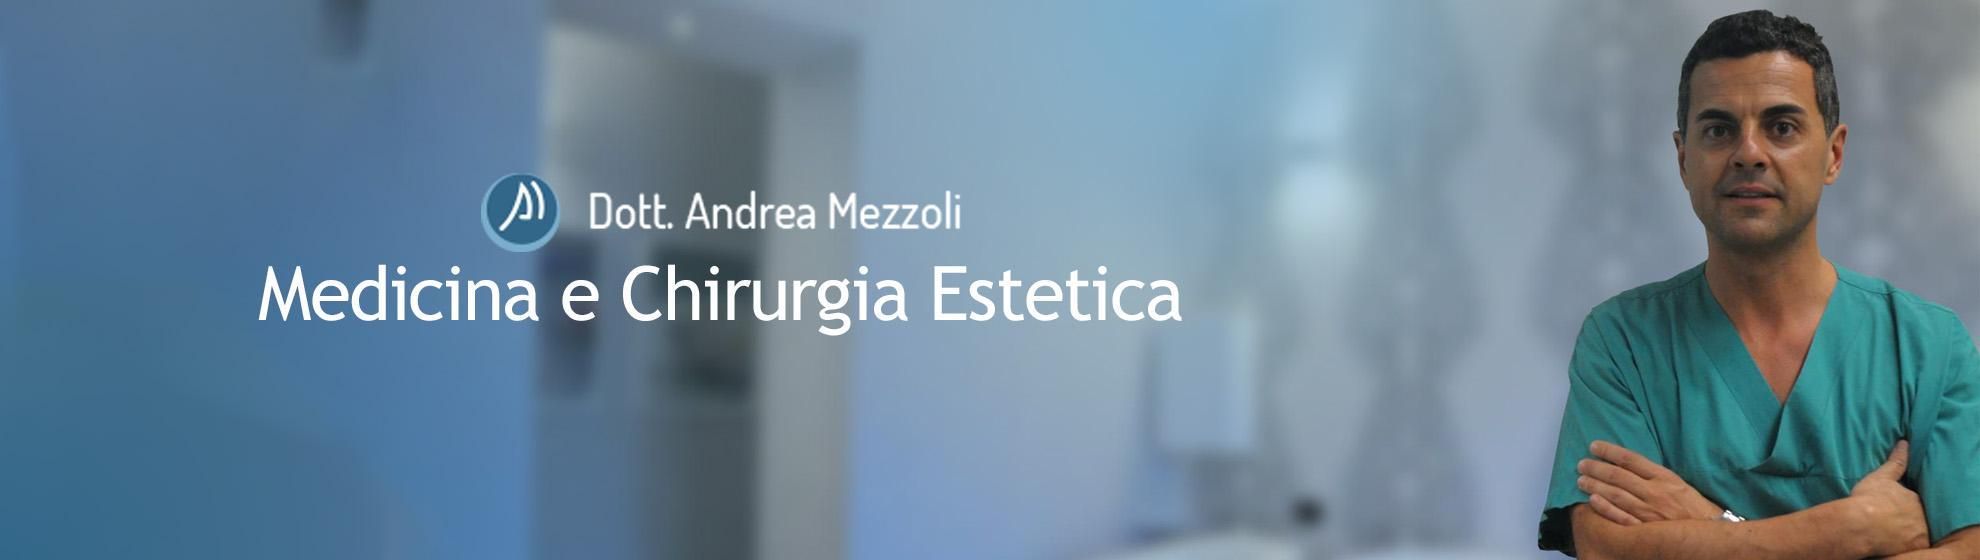 Dott Mezzoli Andrea